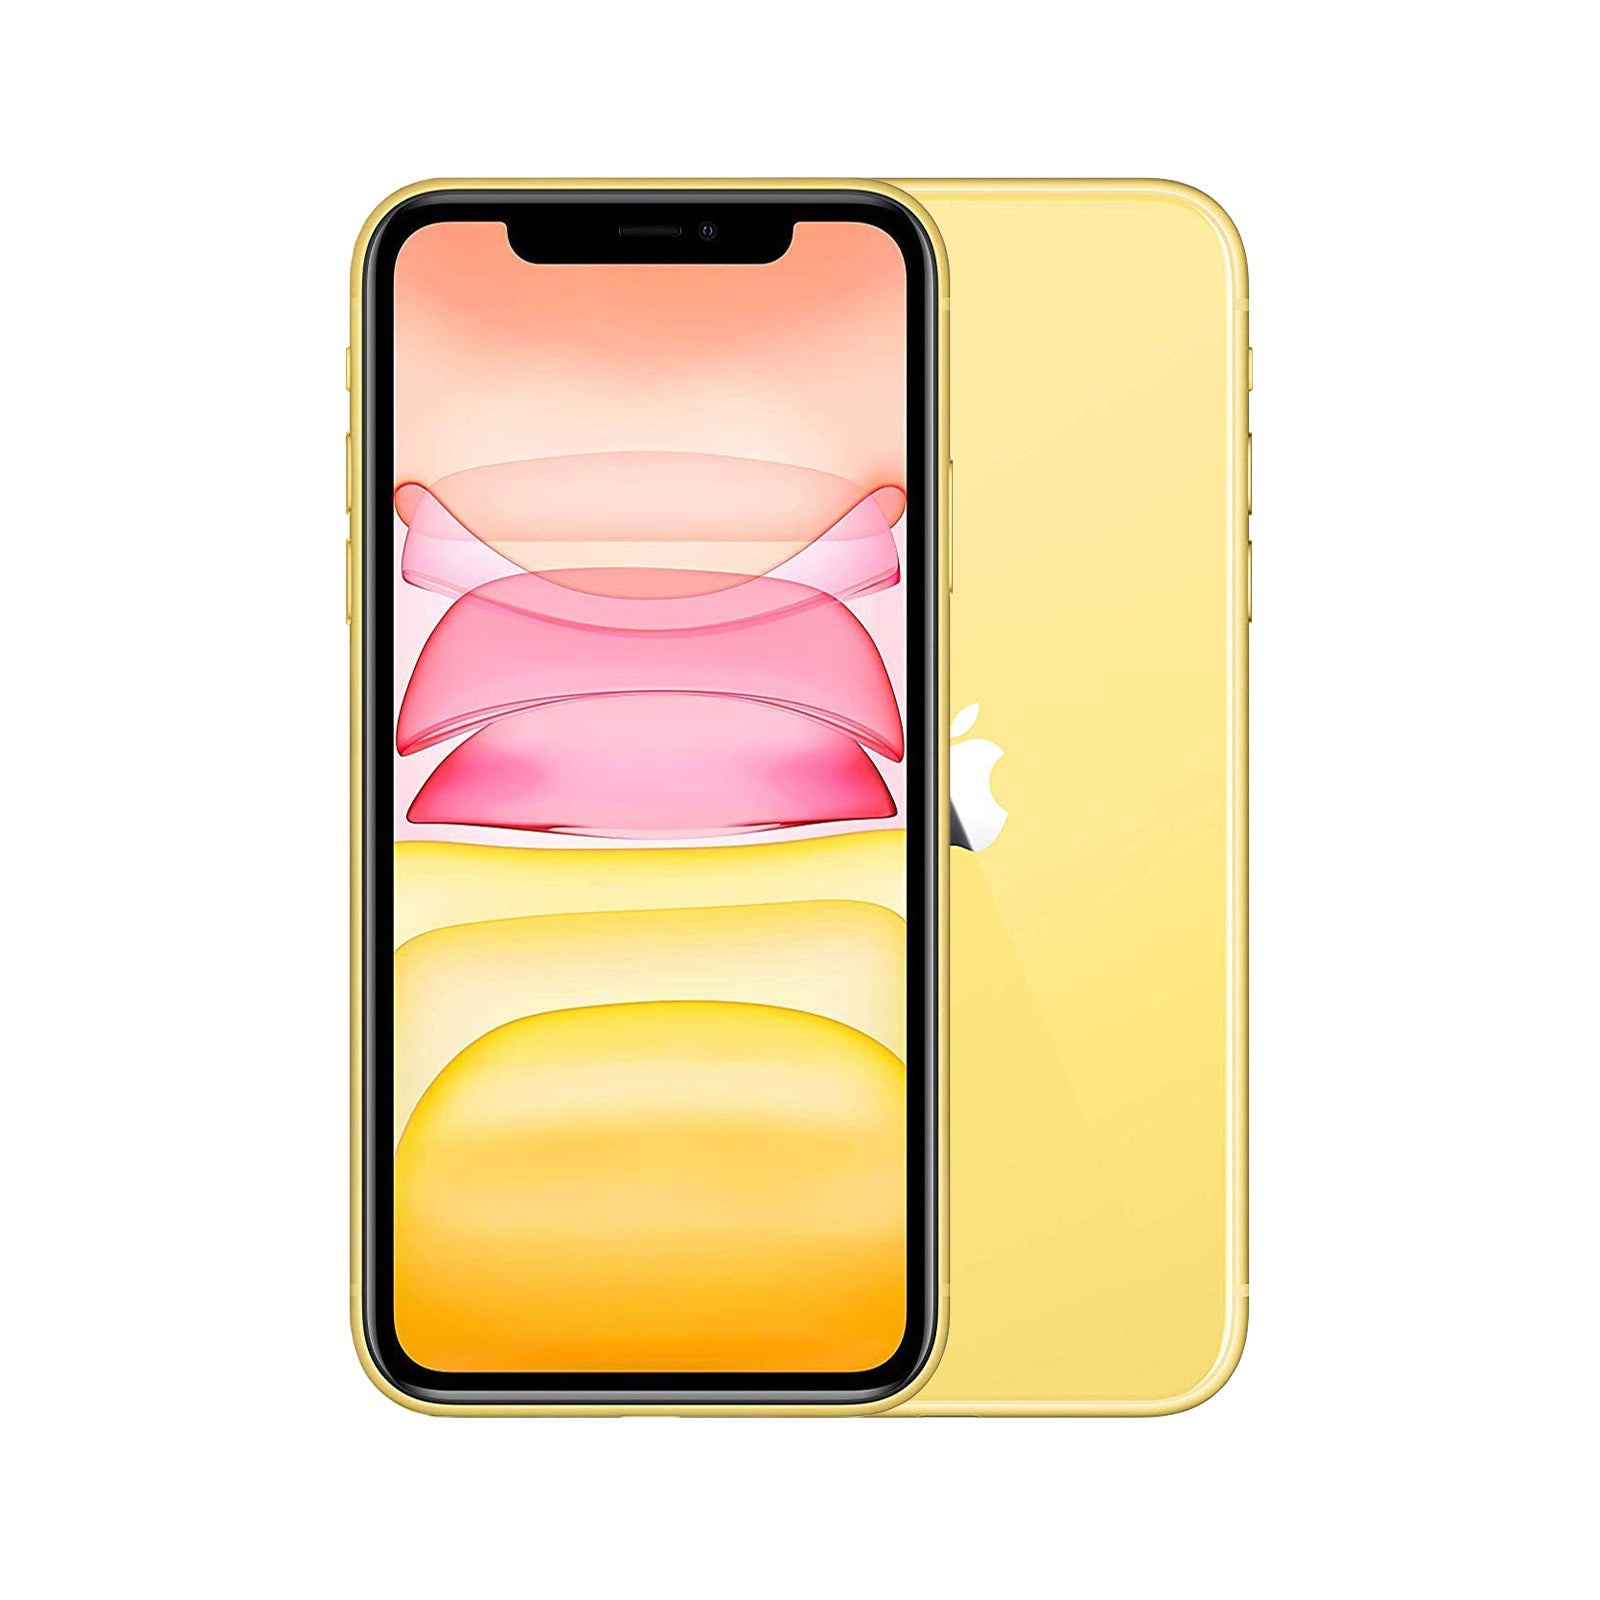 Apple iPhone 11 64GB Yellow - Very Good - Refurbished